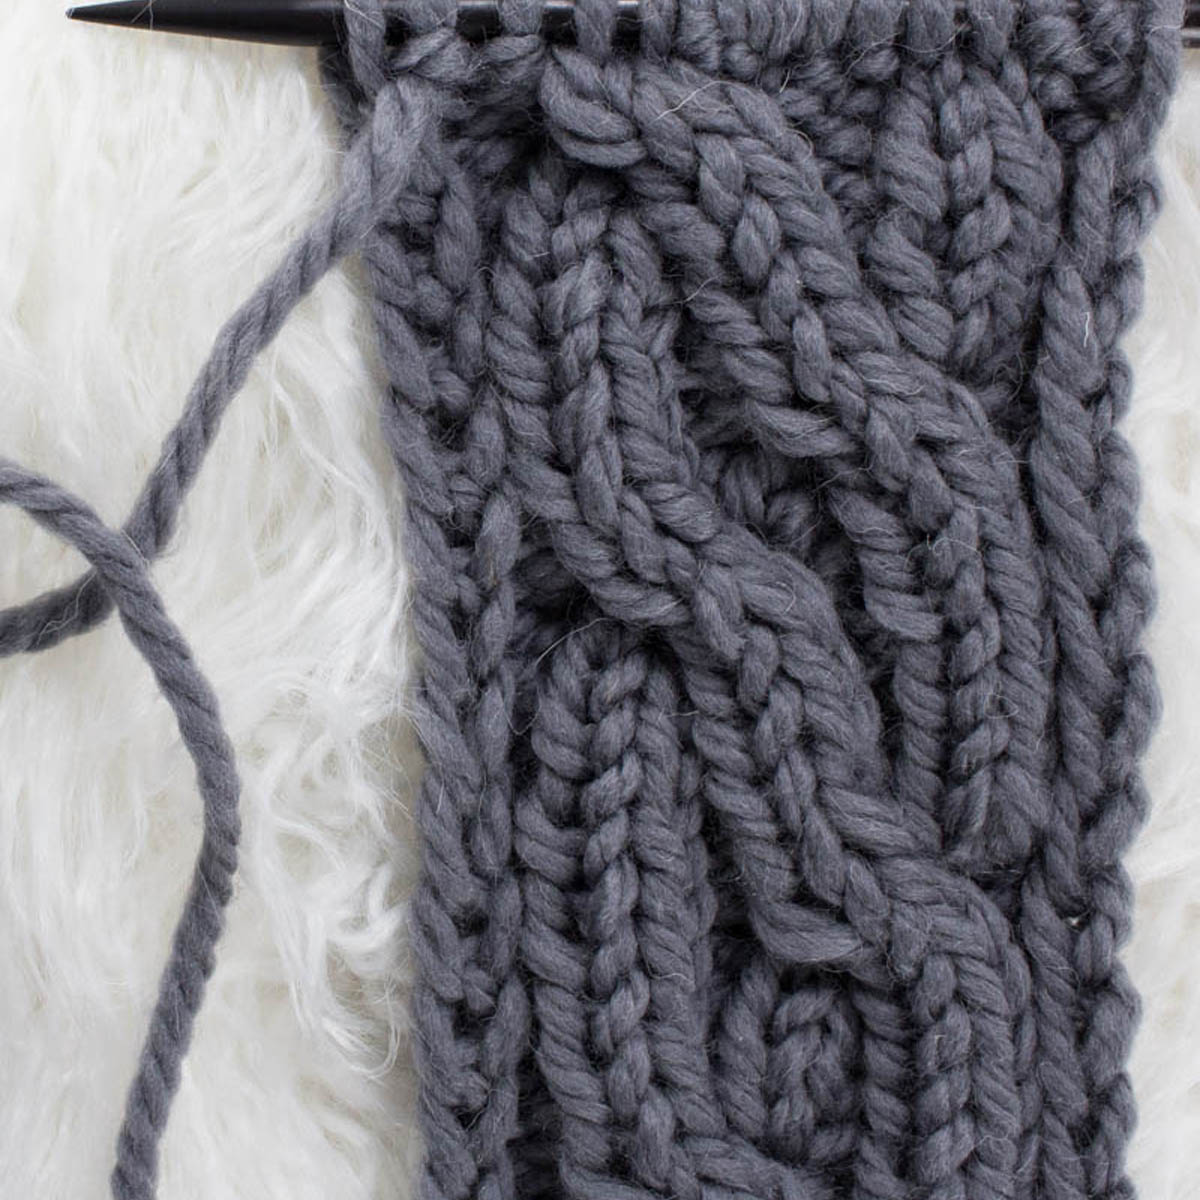 15 Cable Knit Stitches Bundle : Brome Fields